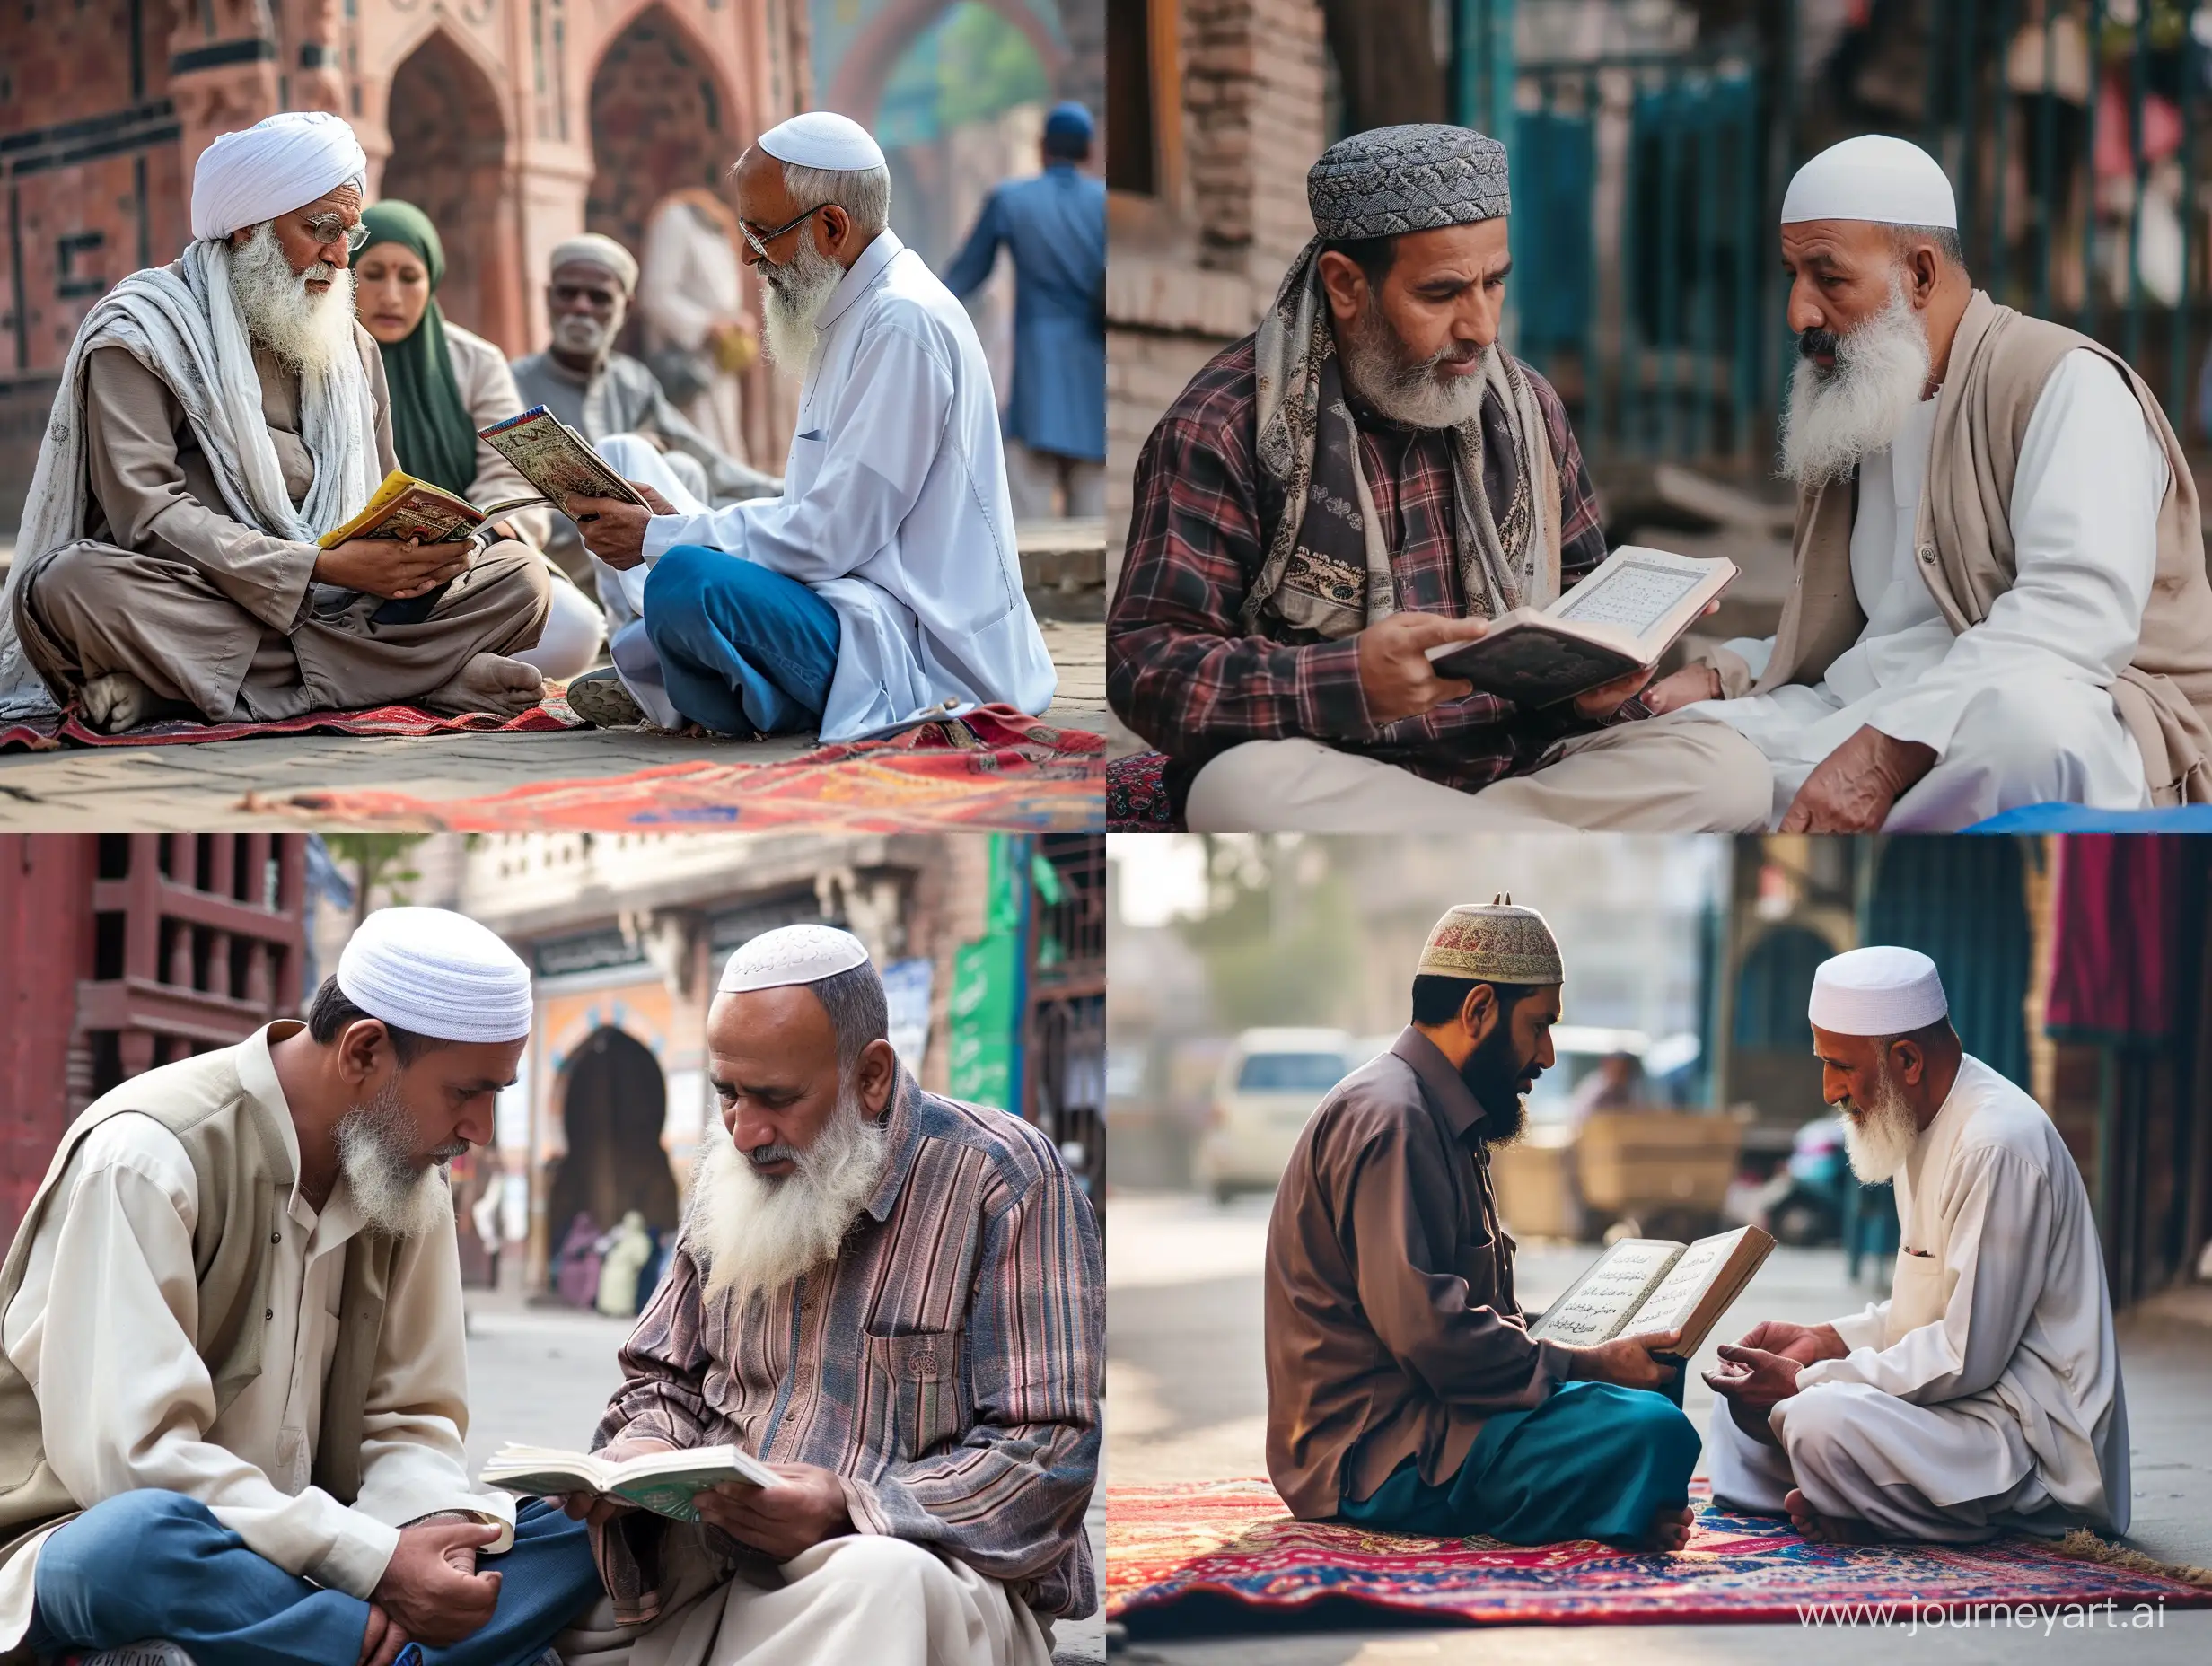 A Muslim teaches Muslims near a mosque on the street style